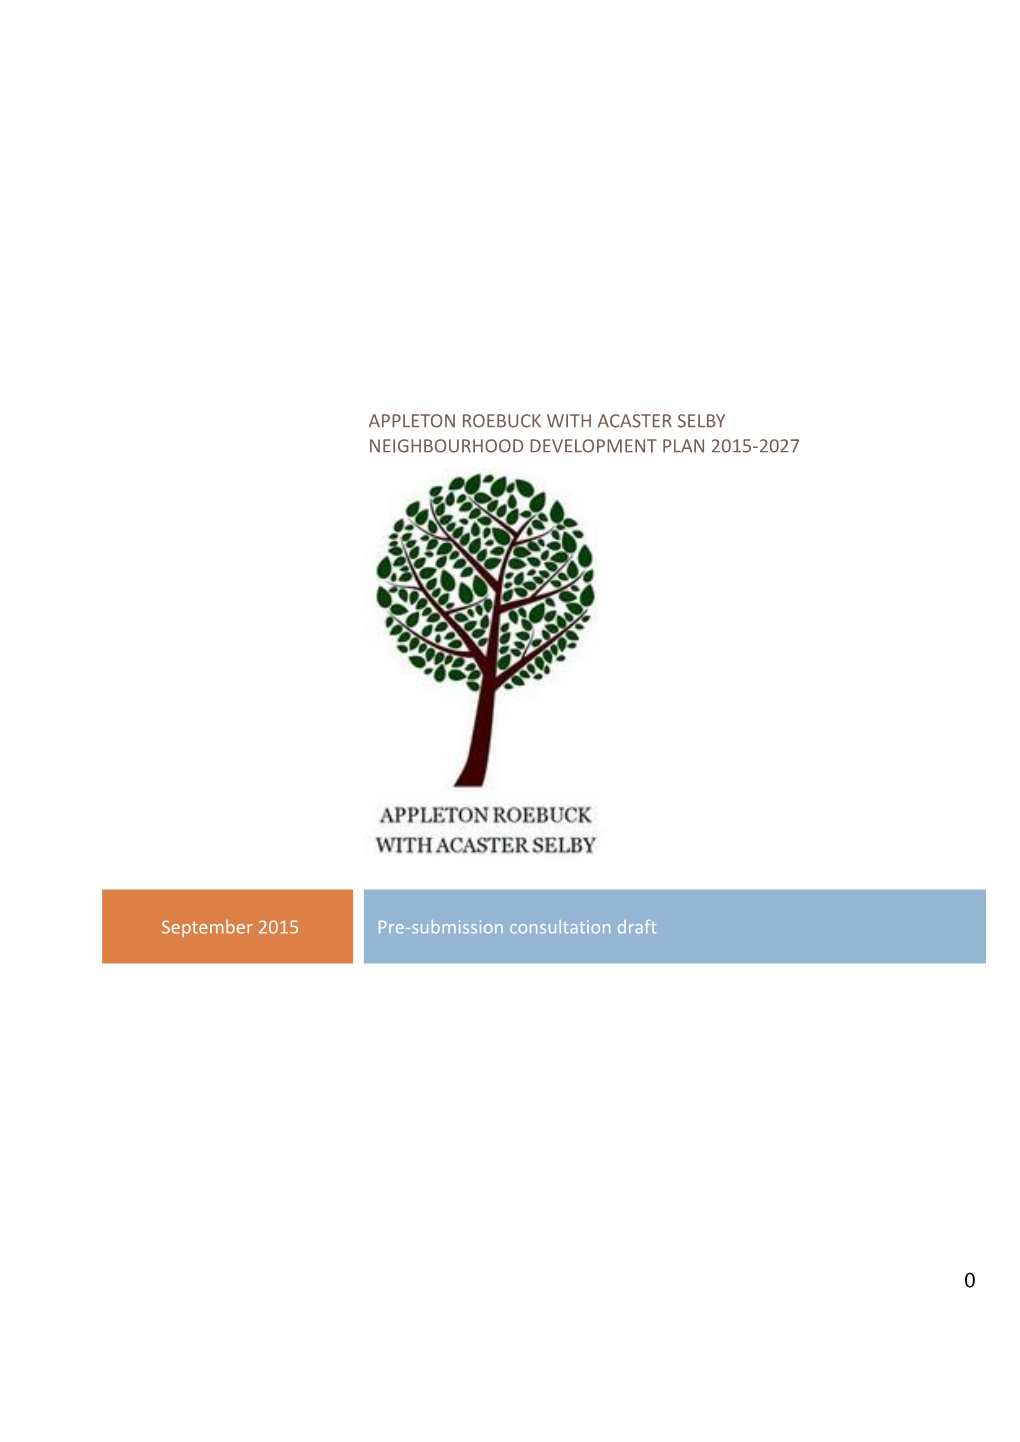 Appleton Roebuck with Acaster Selby Neighbourhood Development Plan 2015-2027